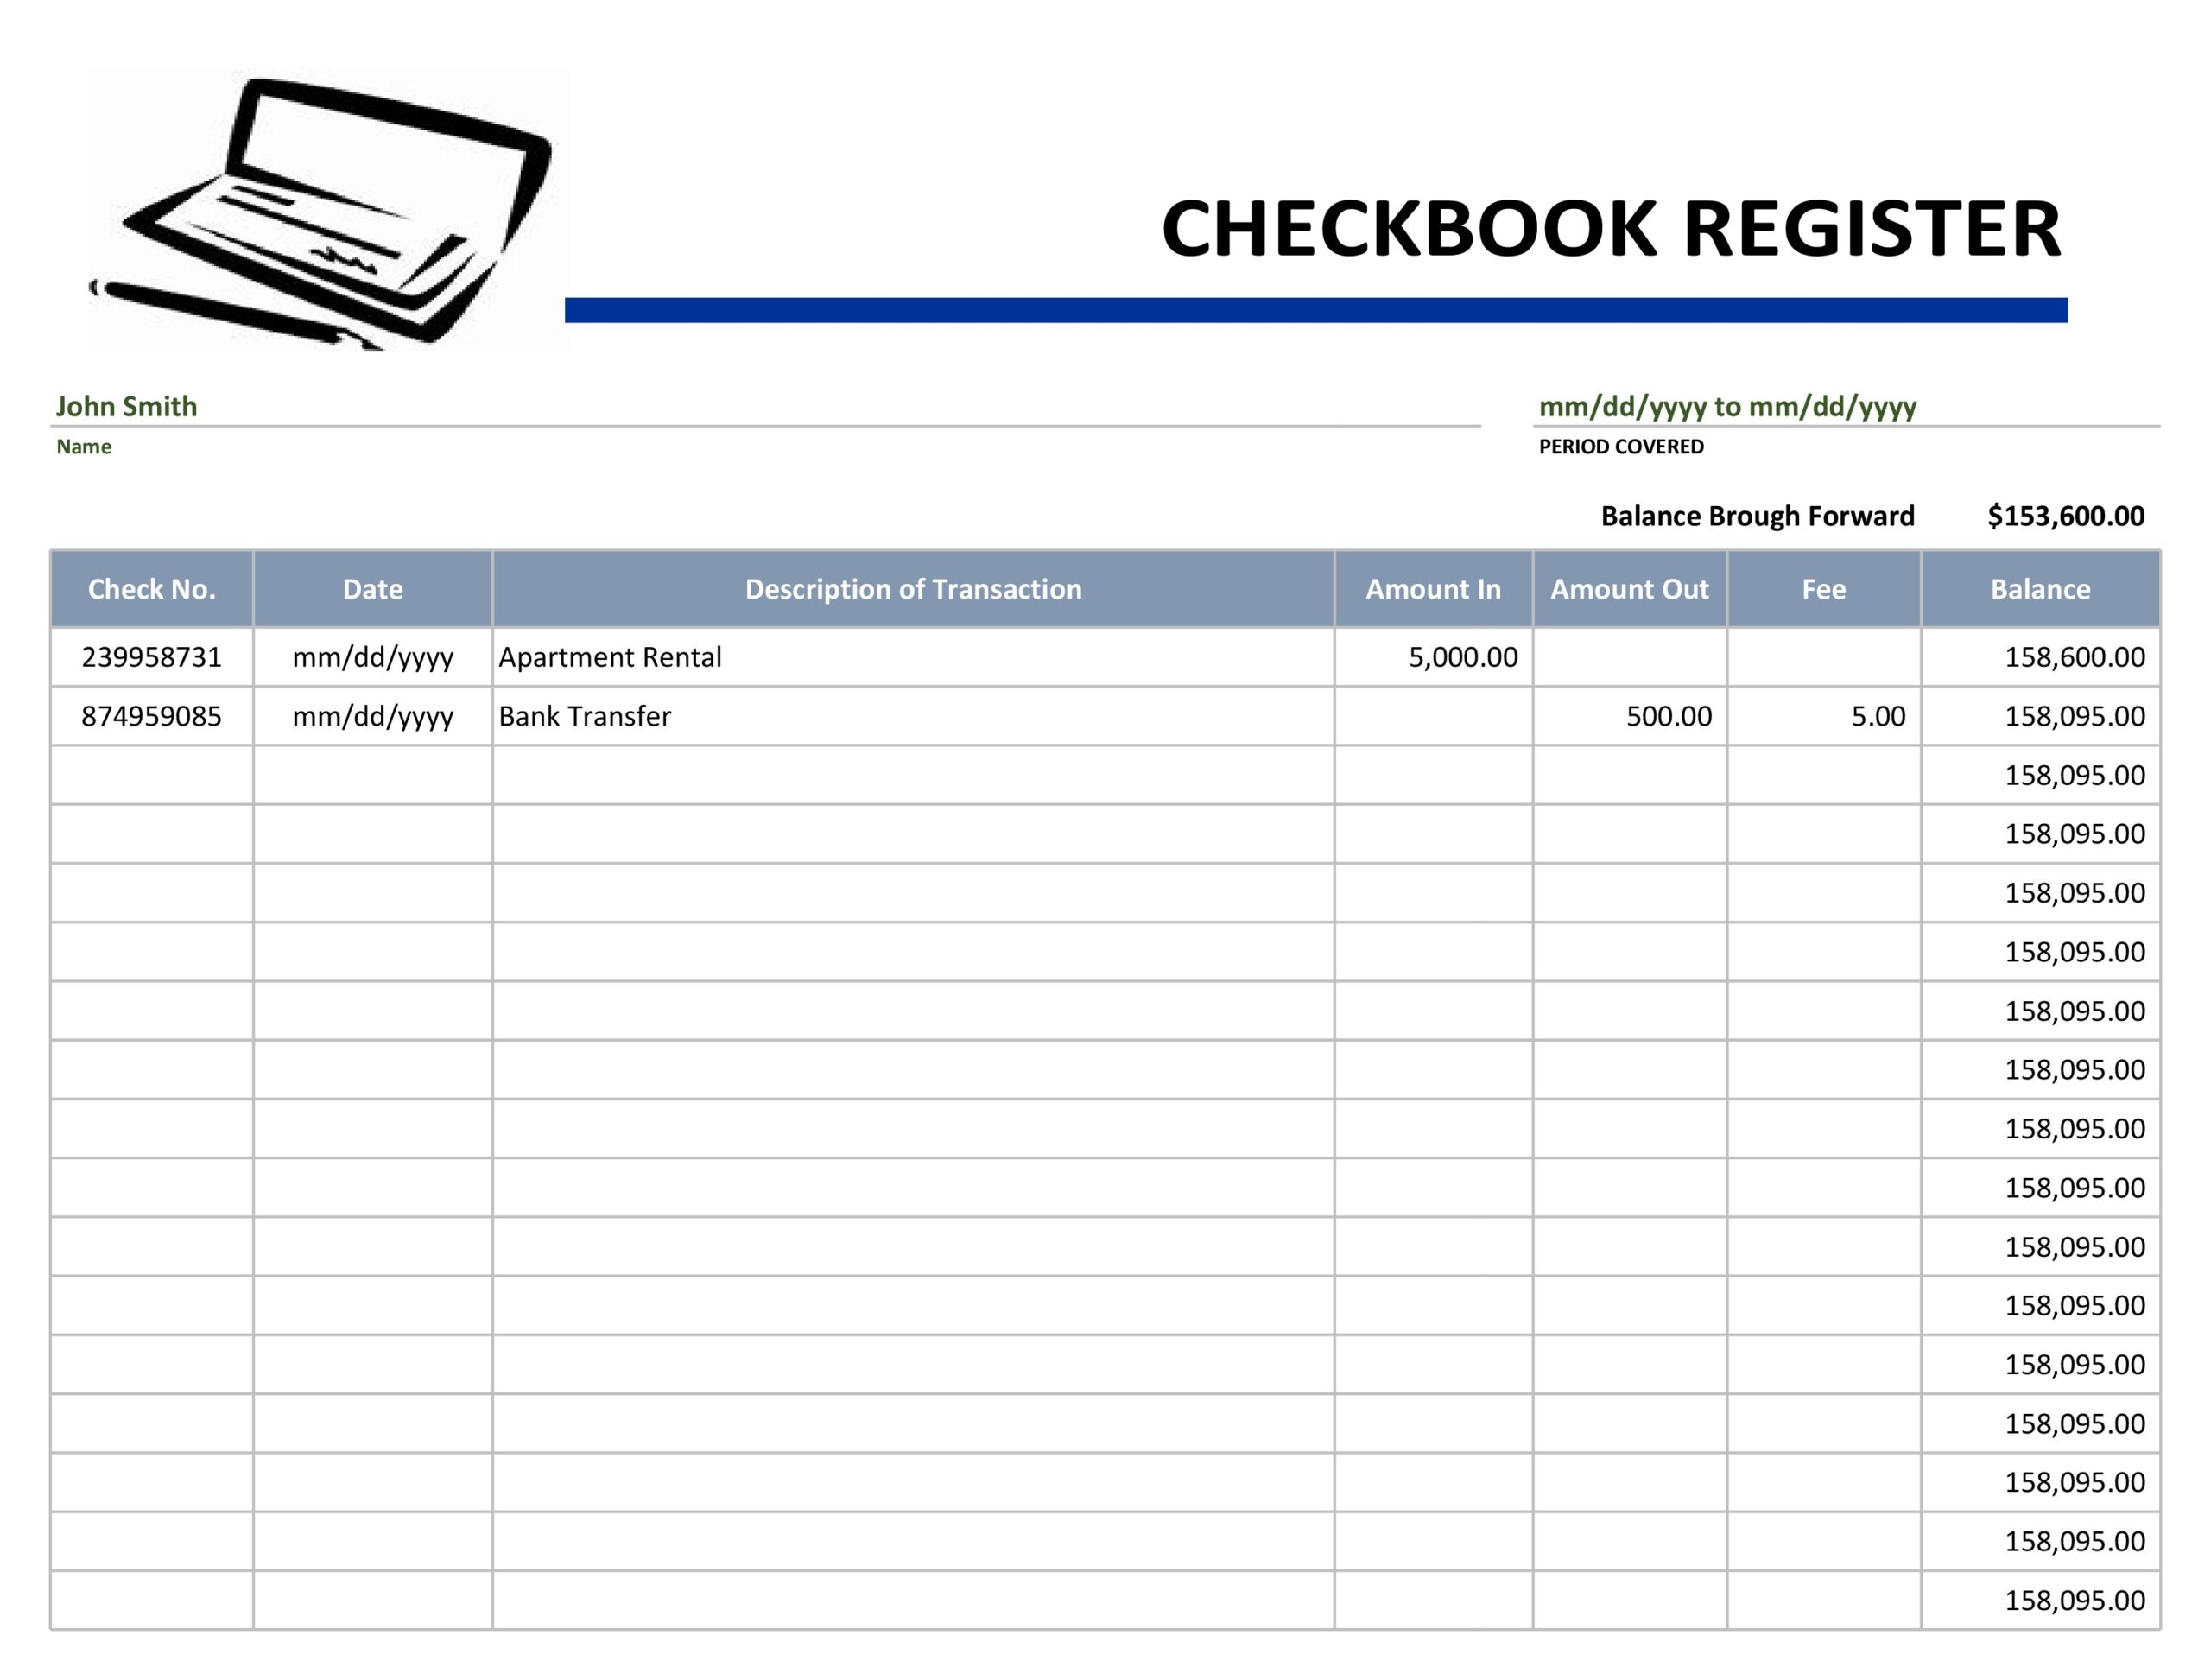 39 Checkbook Register Templates 100% Free, Printable ᐅ ...